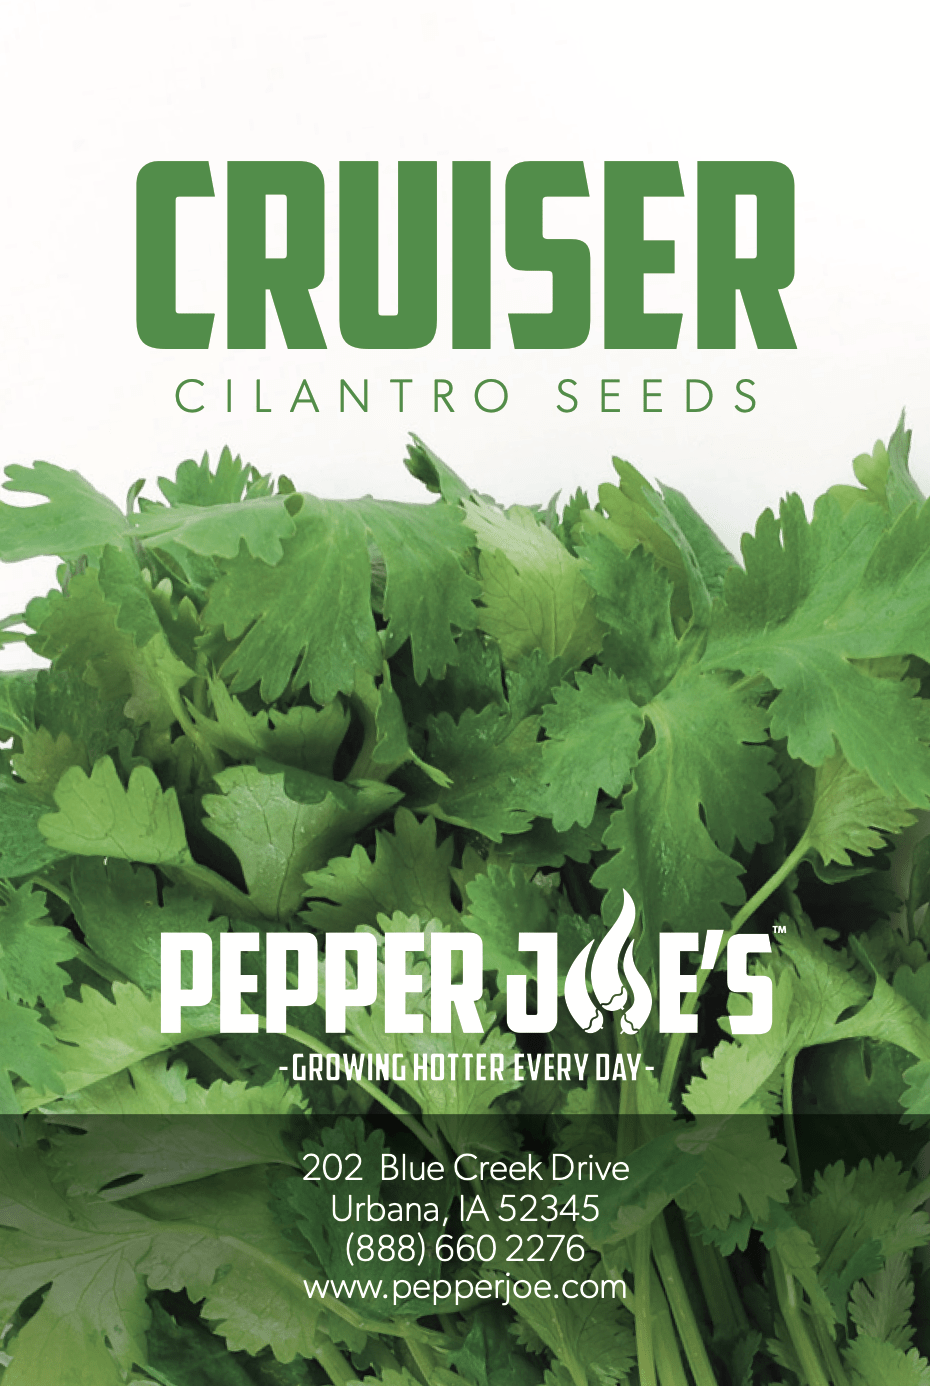 Cruiser Cilantro Seeds